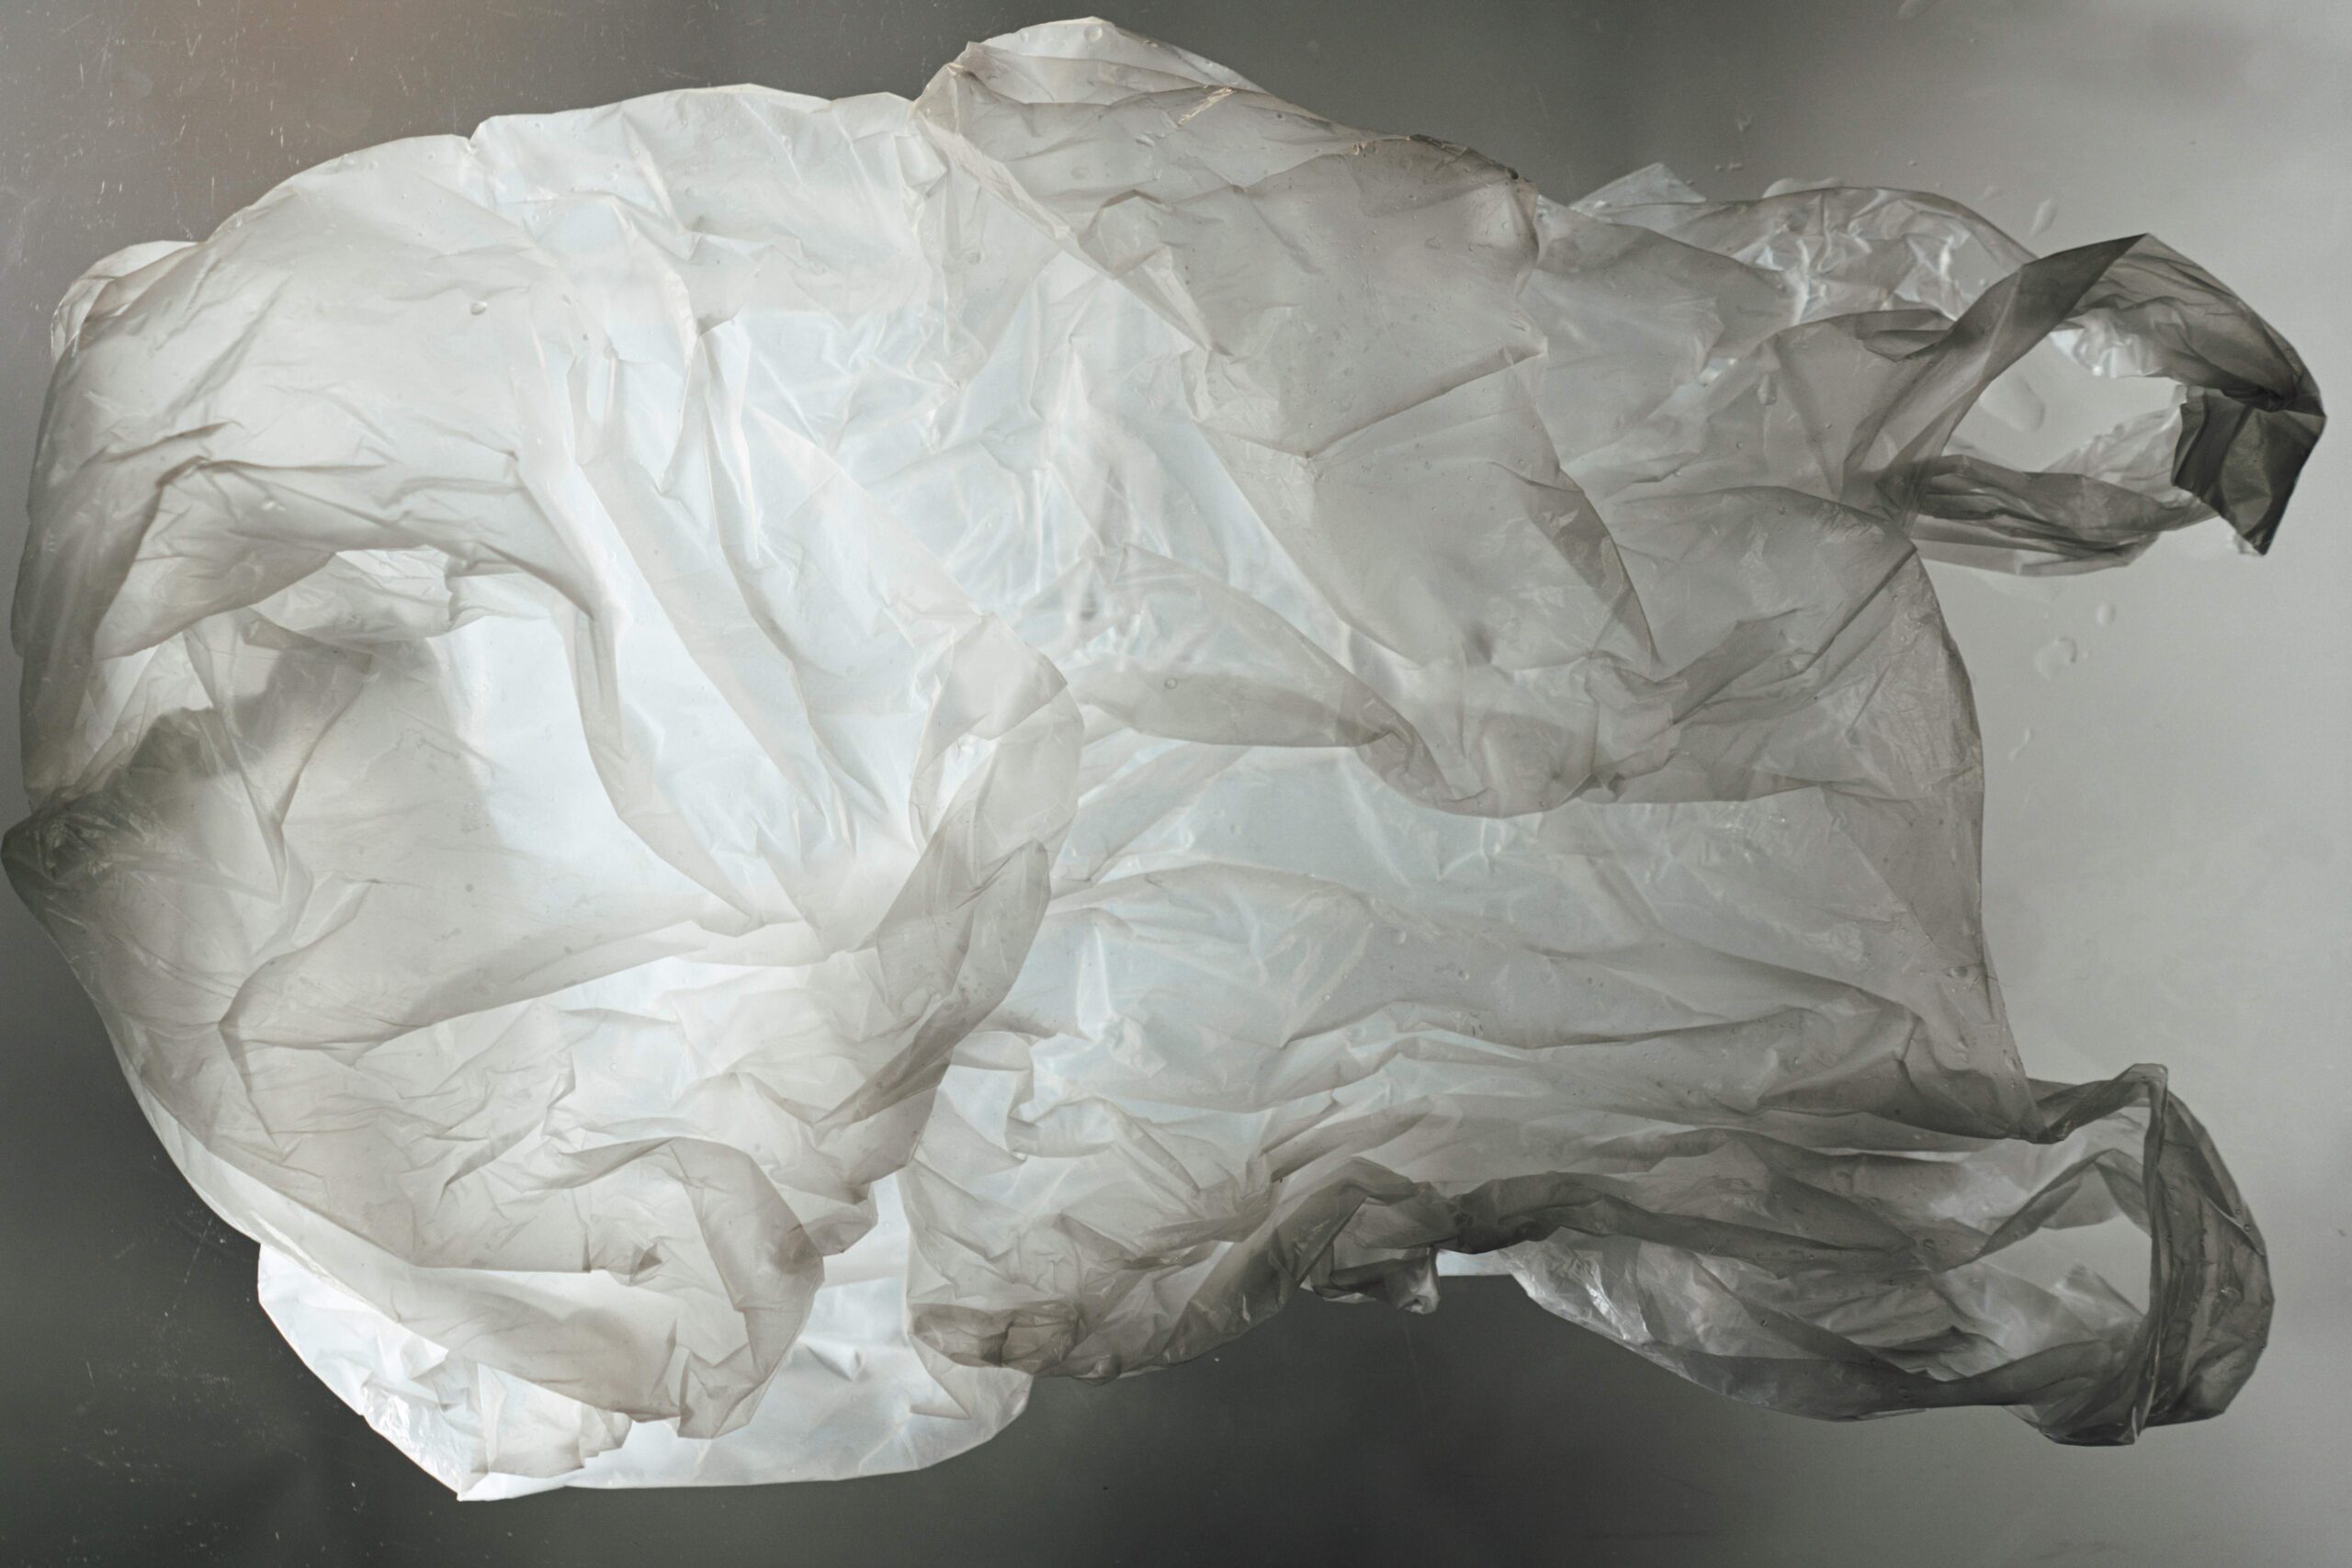 California Revisiting the Plastic Bag Ban